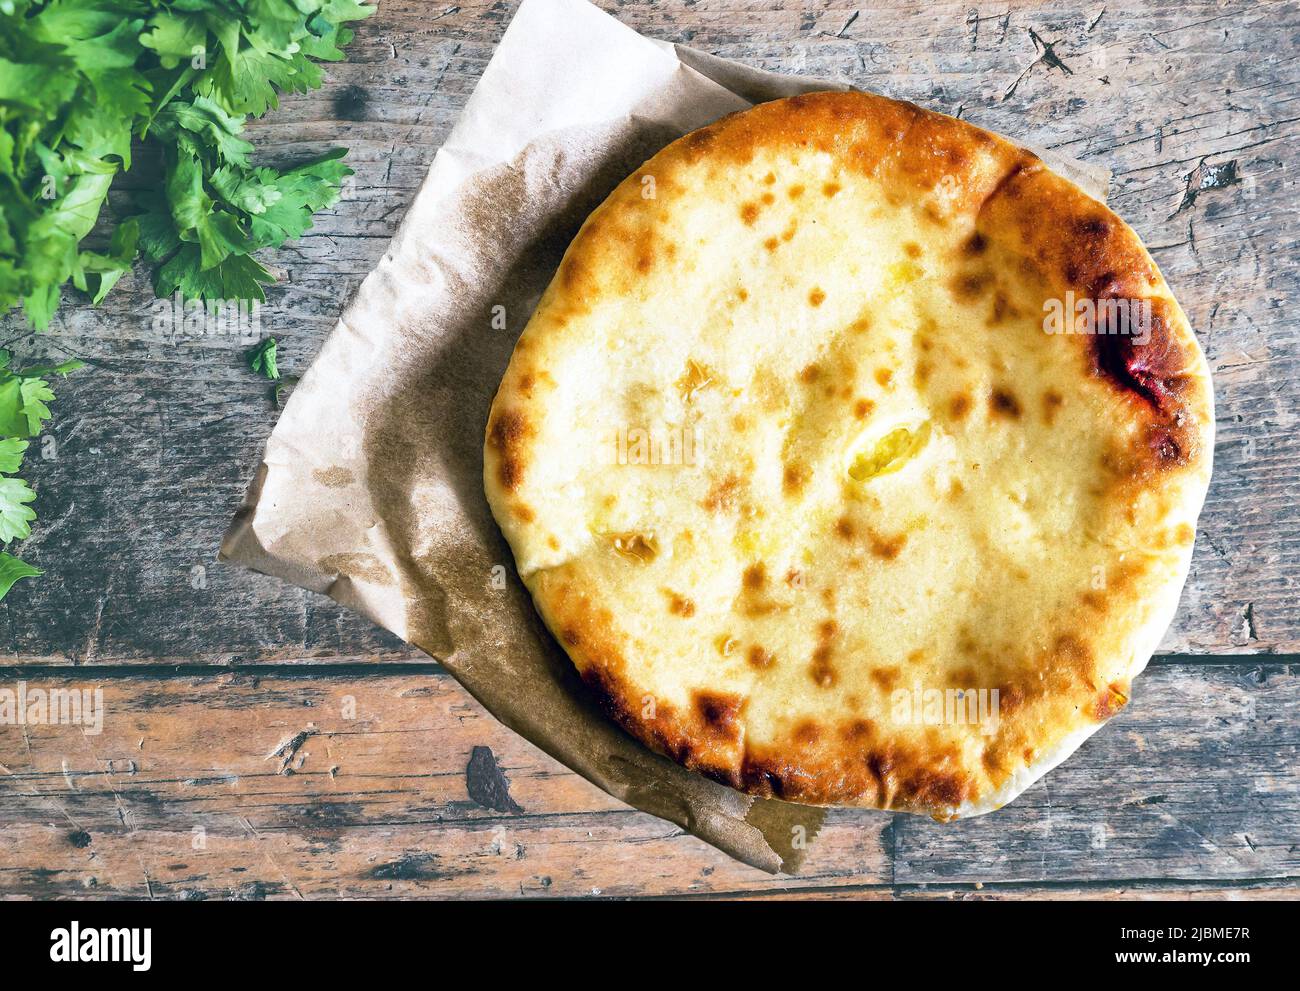 National Georgian pastry - khachapuri stuffed with cheese Stock Photo